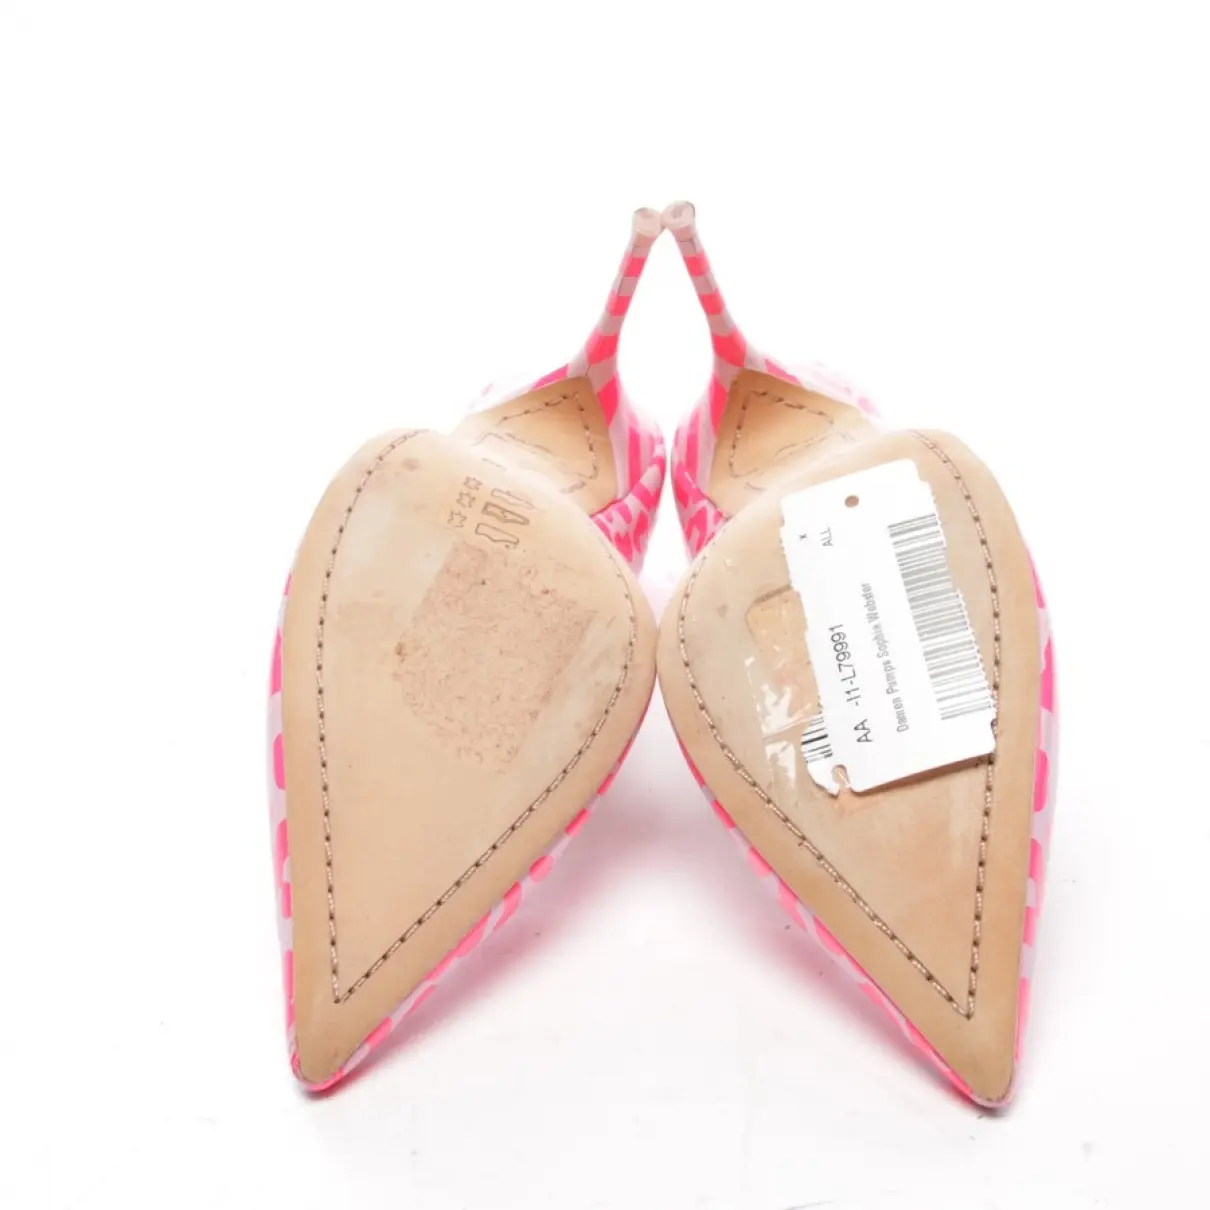 Patent leather heels Sophia Webster